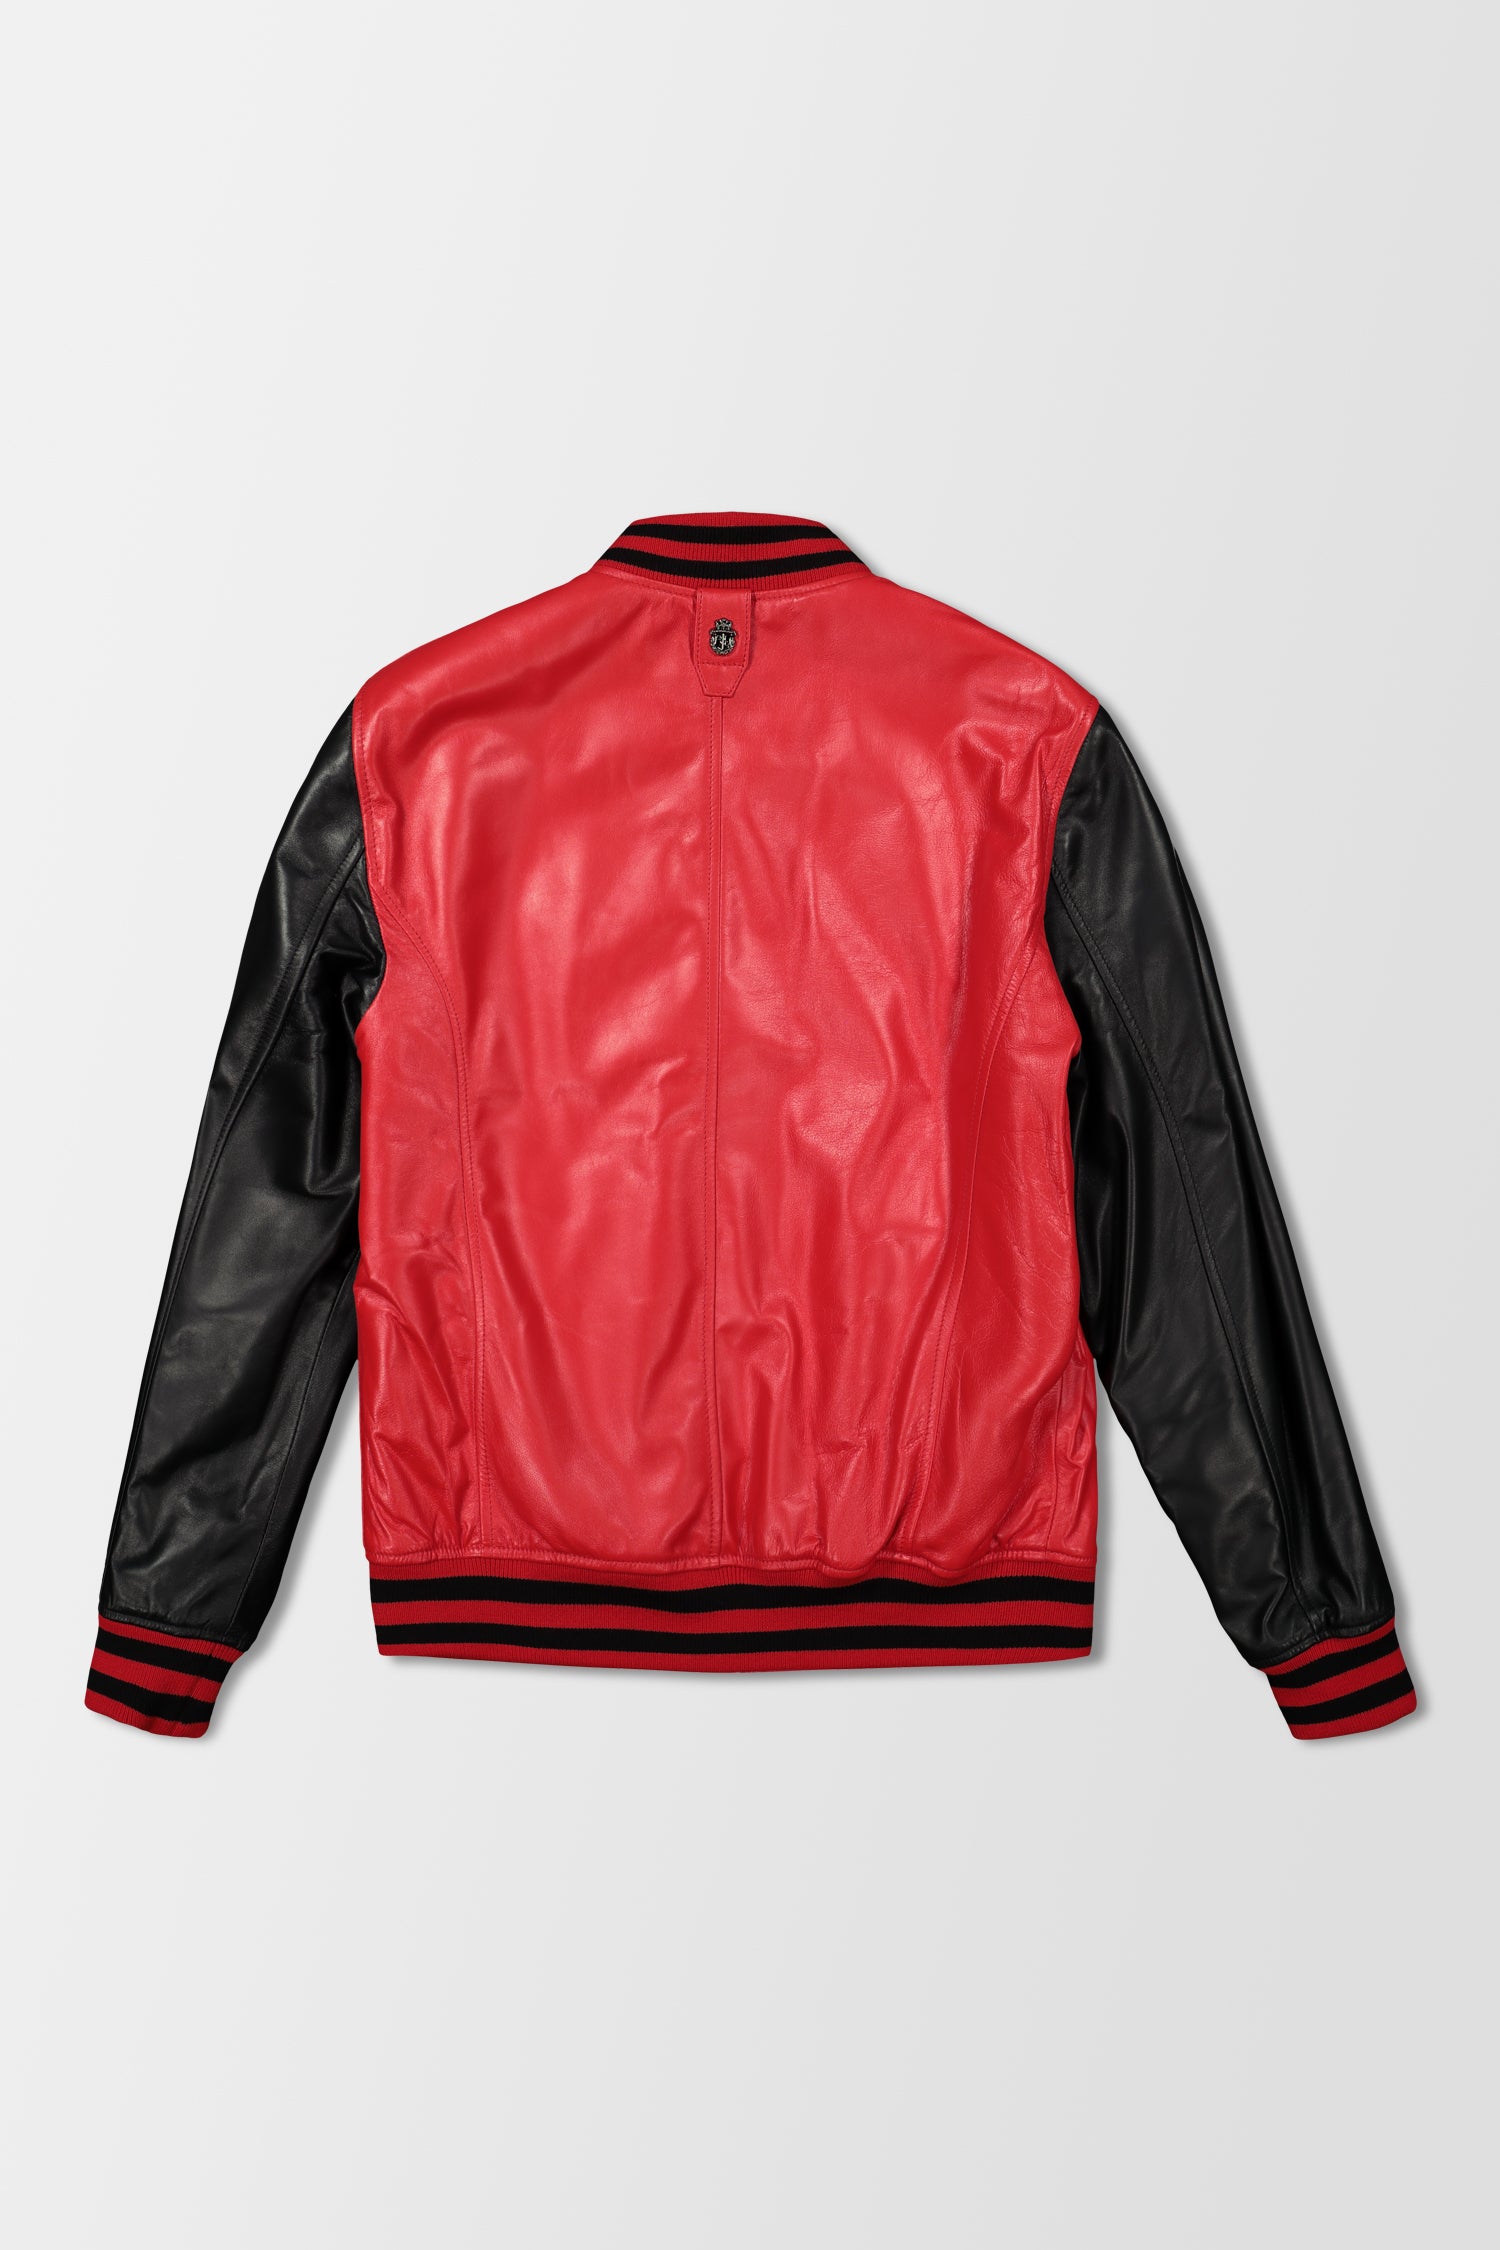 Billionaire Red Leather Bomber Jacket